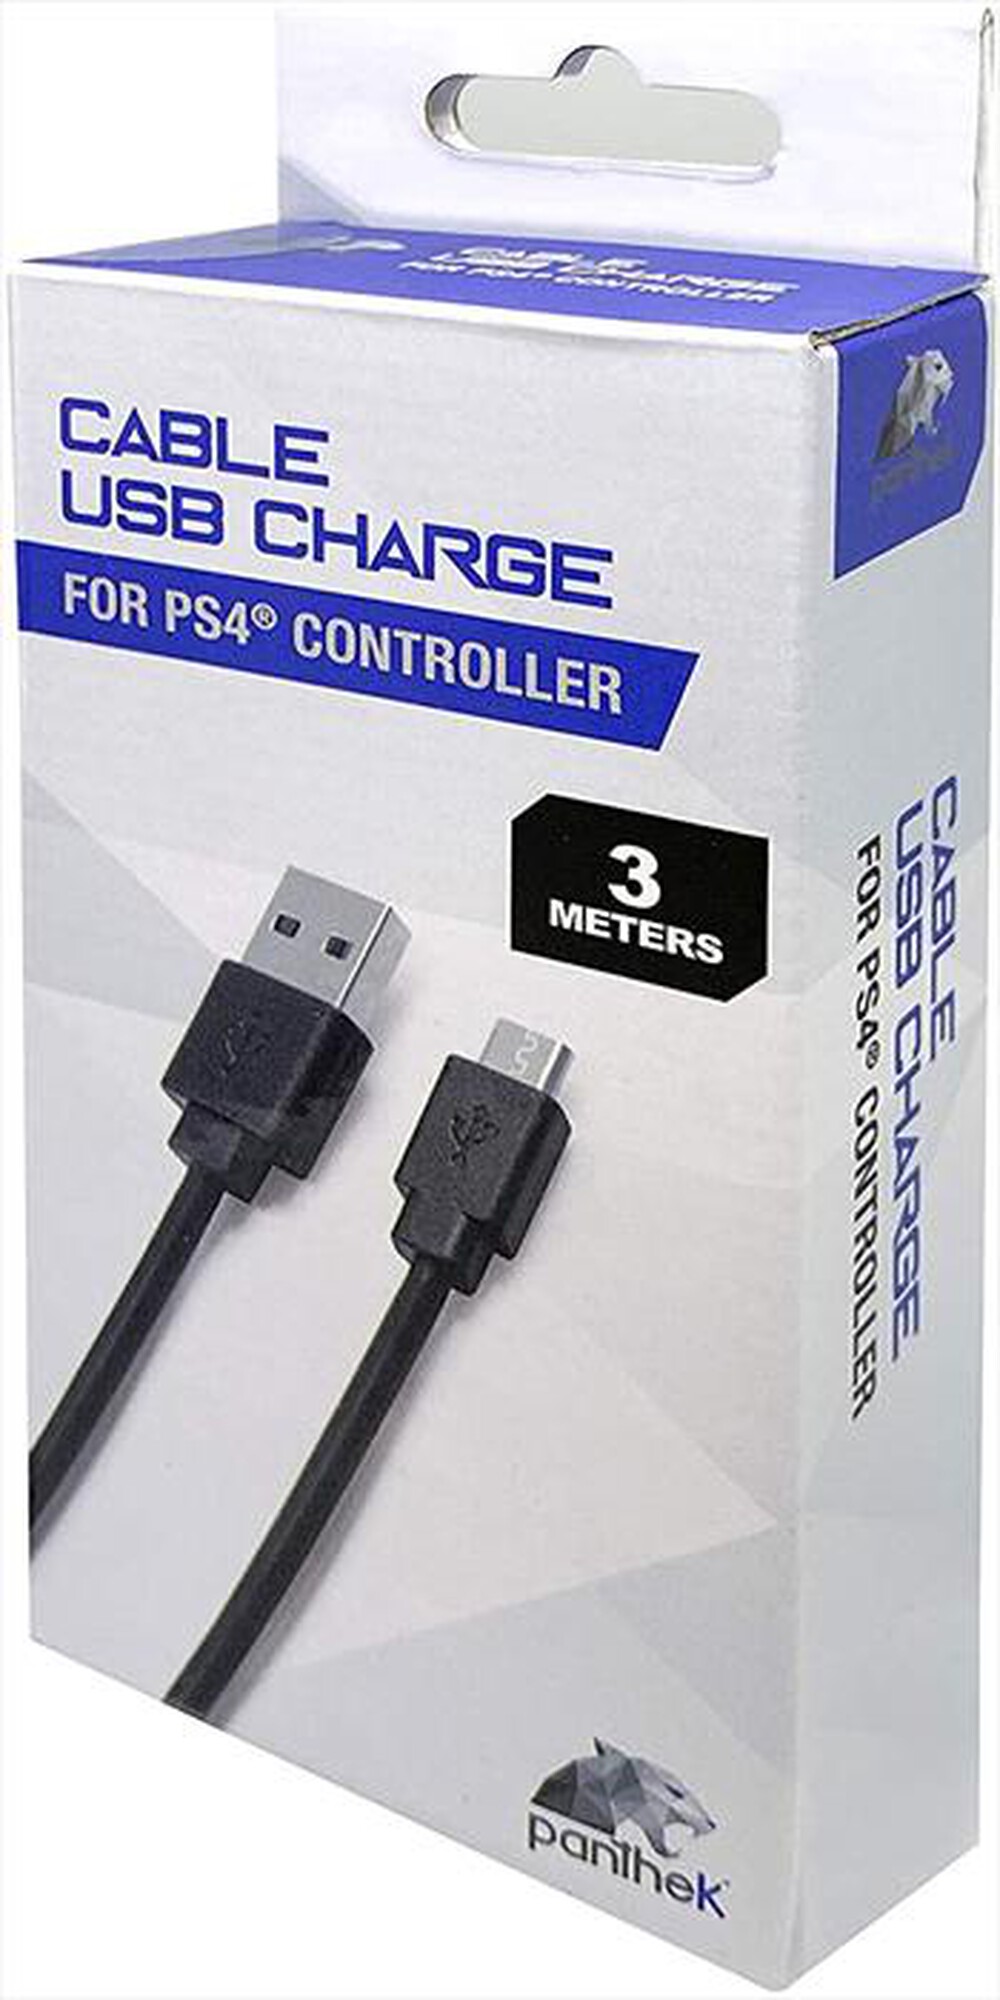 "MT-DISTRIBUTION - PANTHEK CABLE USB CHARGE 2.0 PS4"